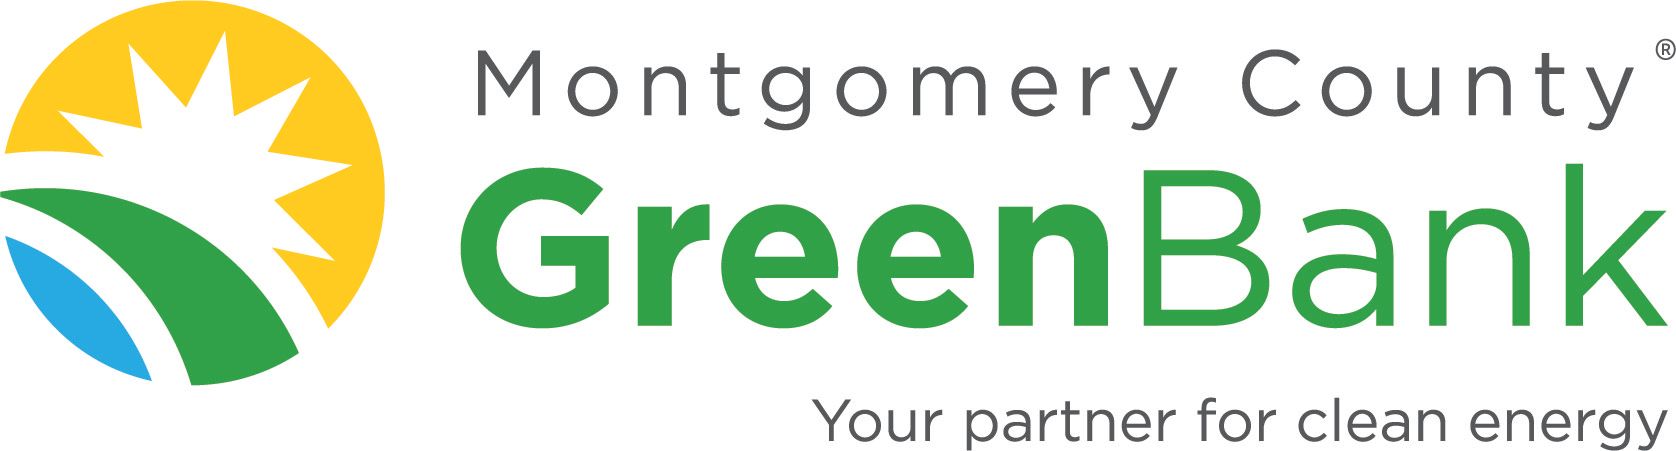 Montgomery County GreenBank